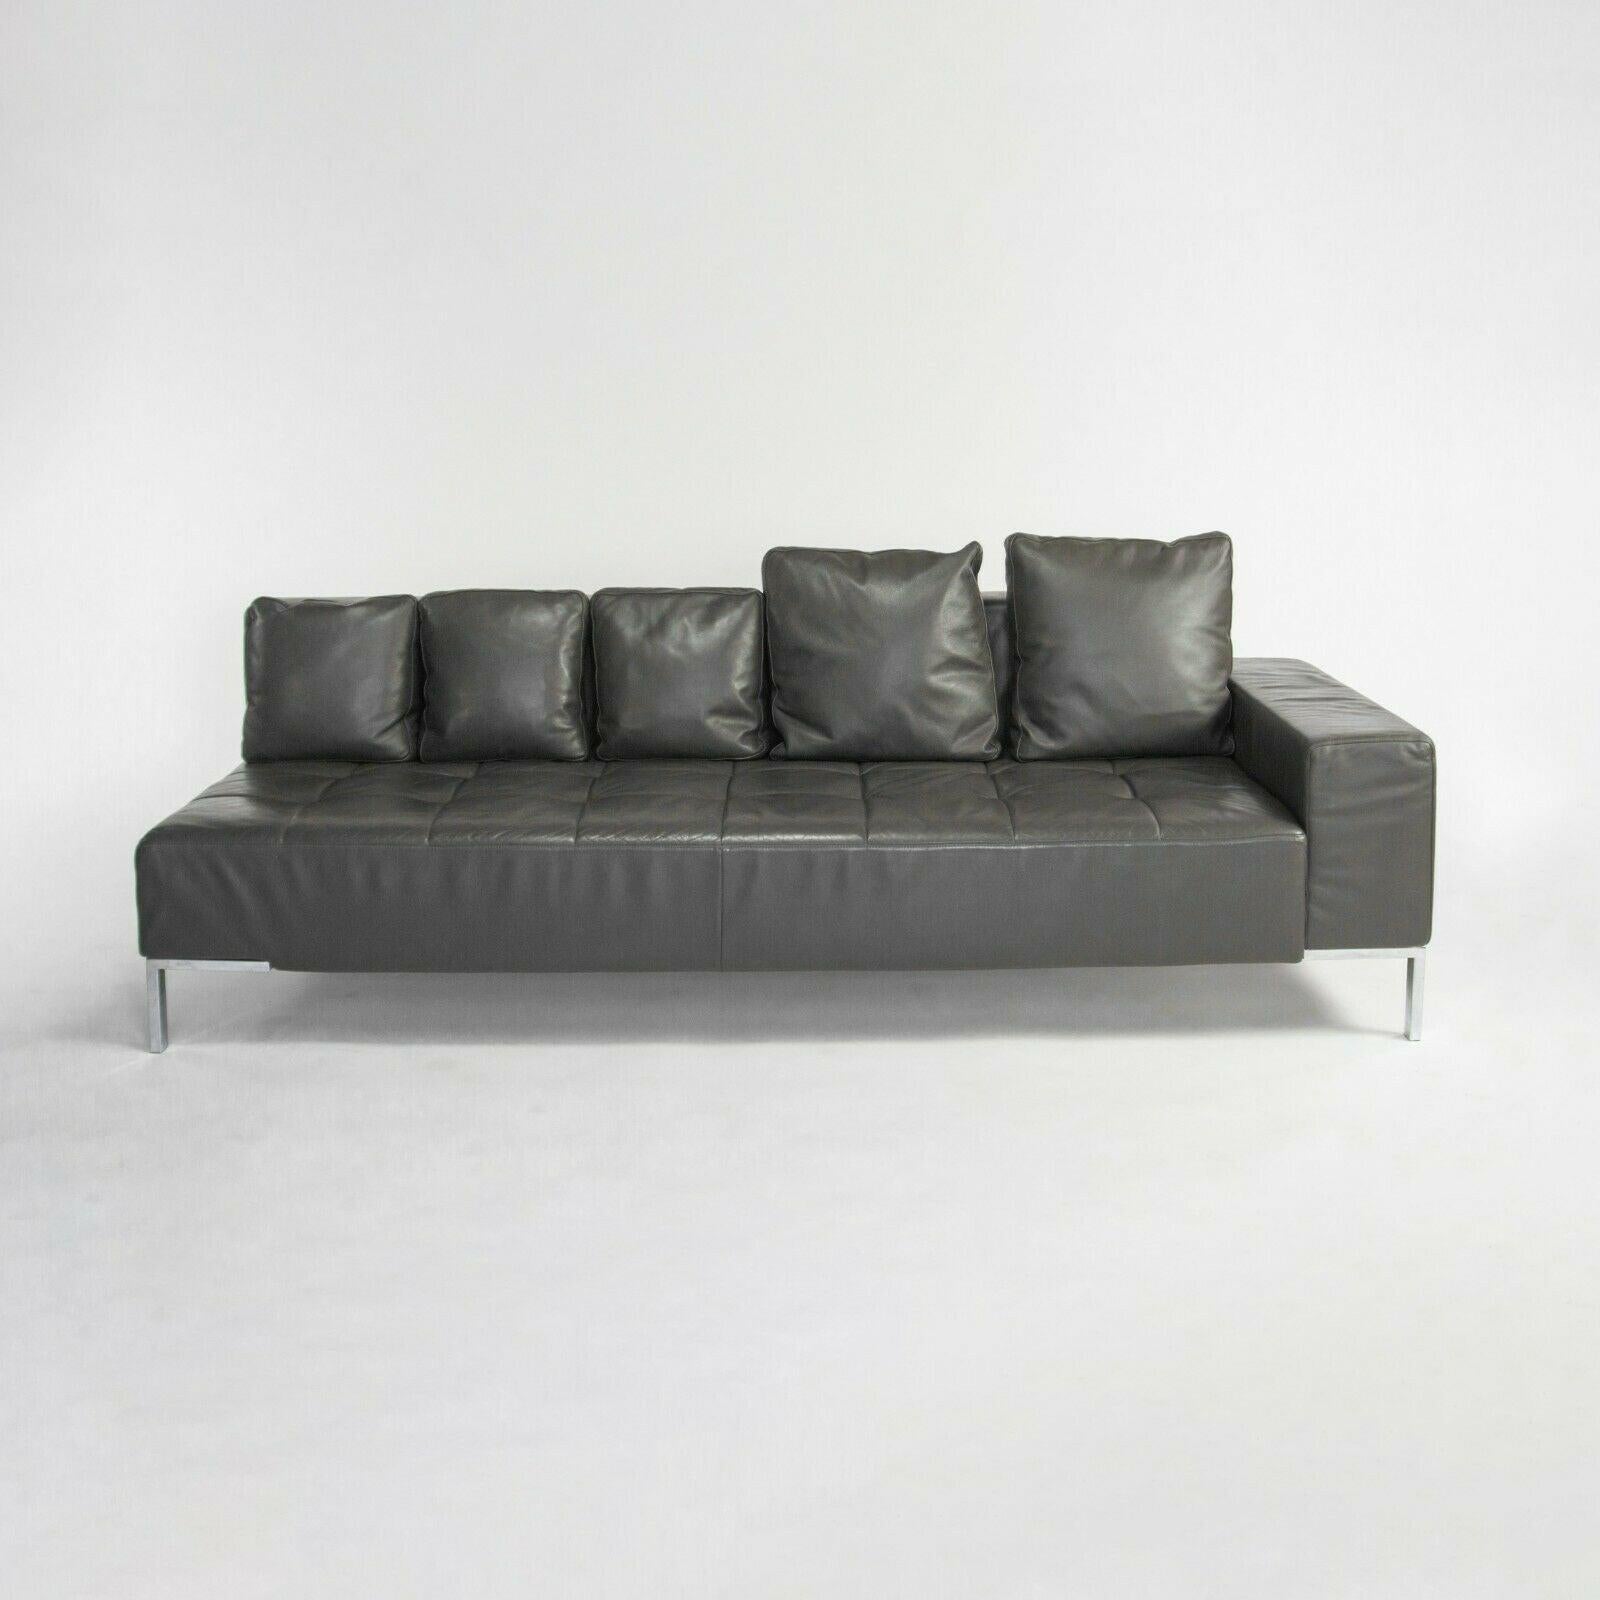 Modern 1999 Zanotta Alfa Grey Leather Sectional Modular Sofa by Emaf Progetti 2x Avail For Sale